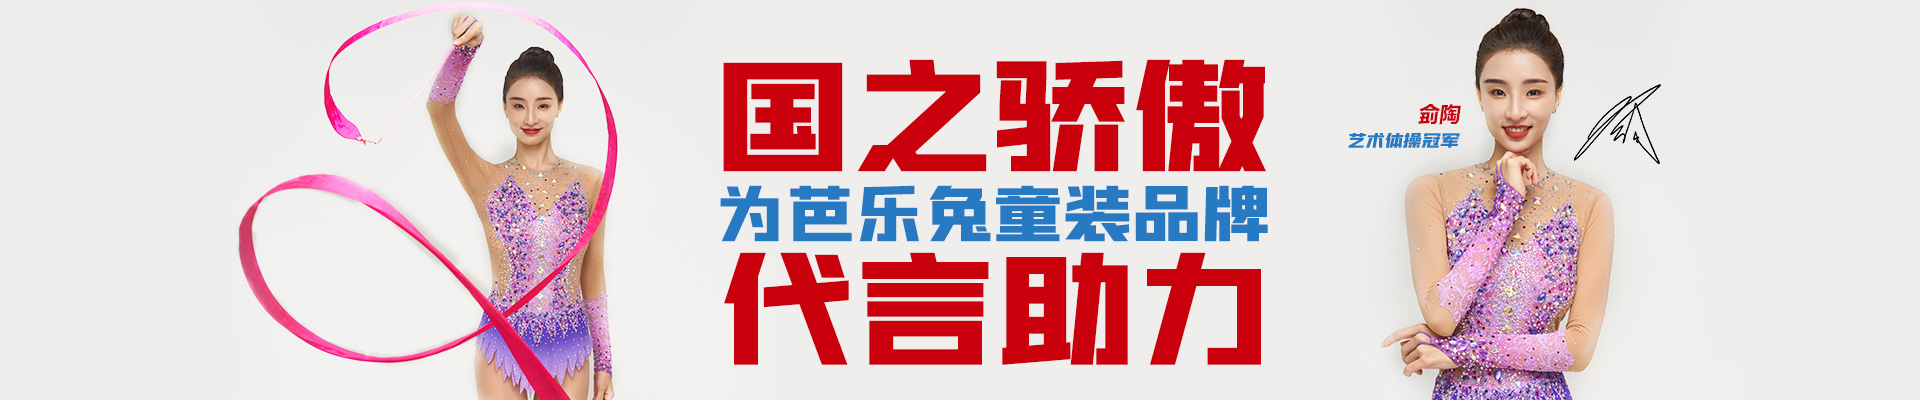 pc端新闻中心banner